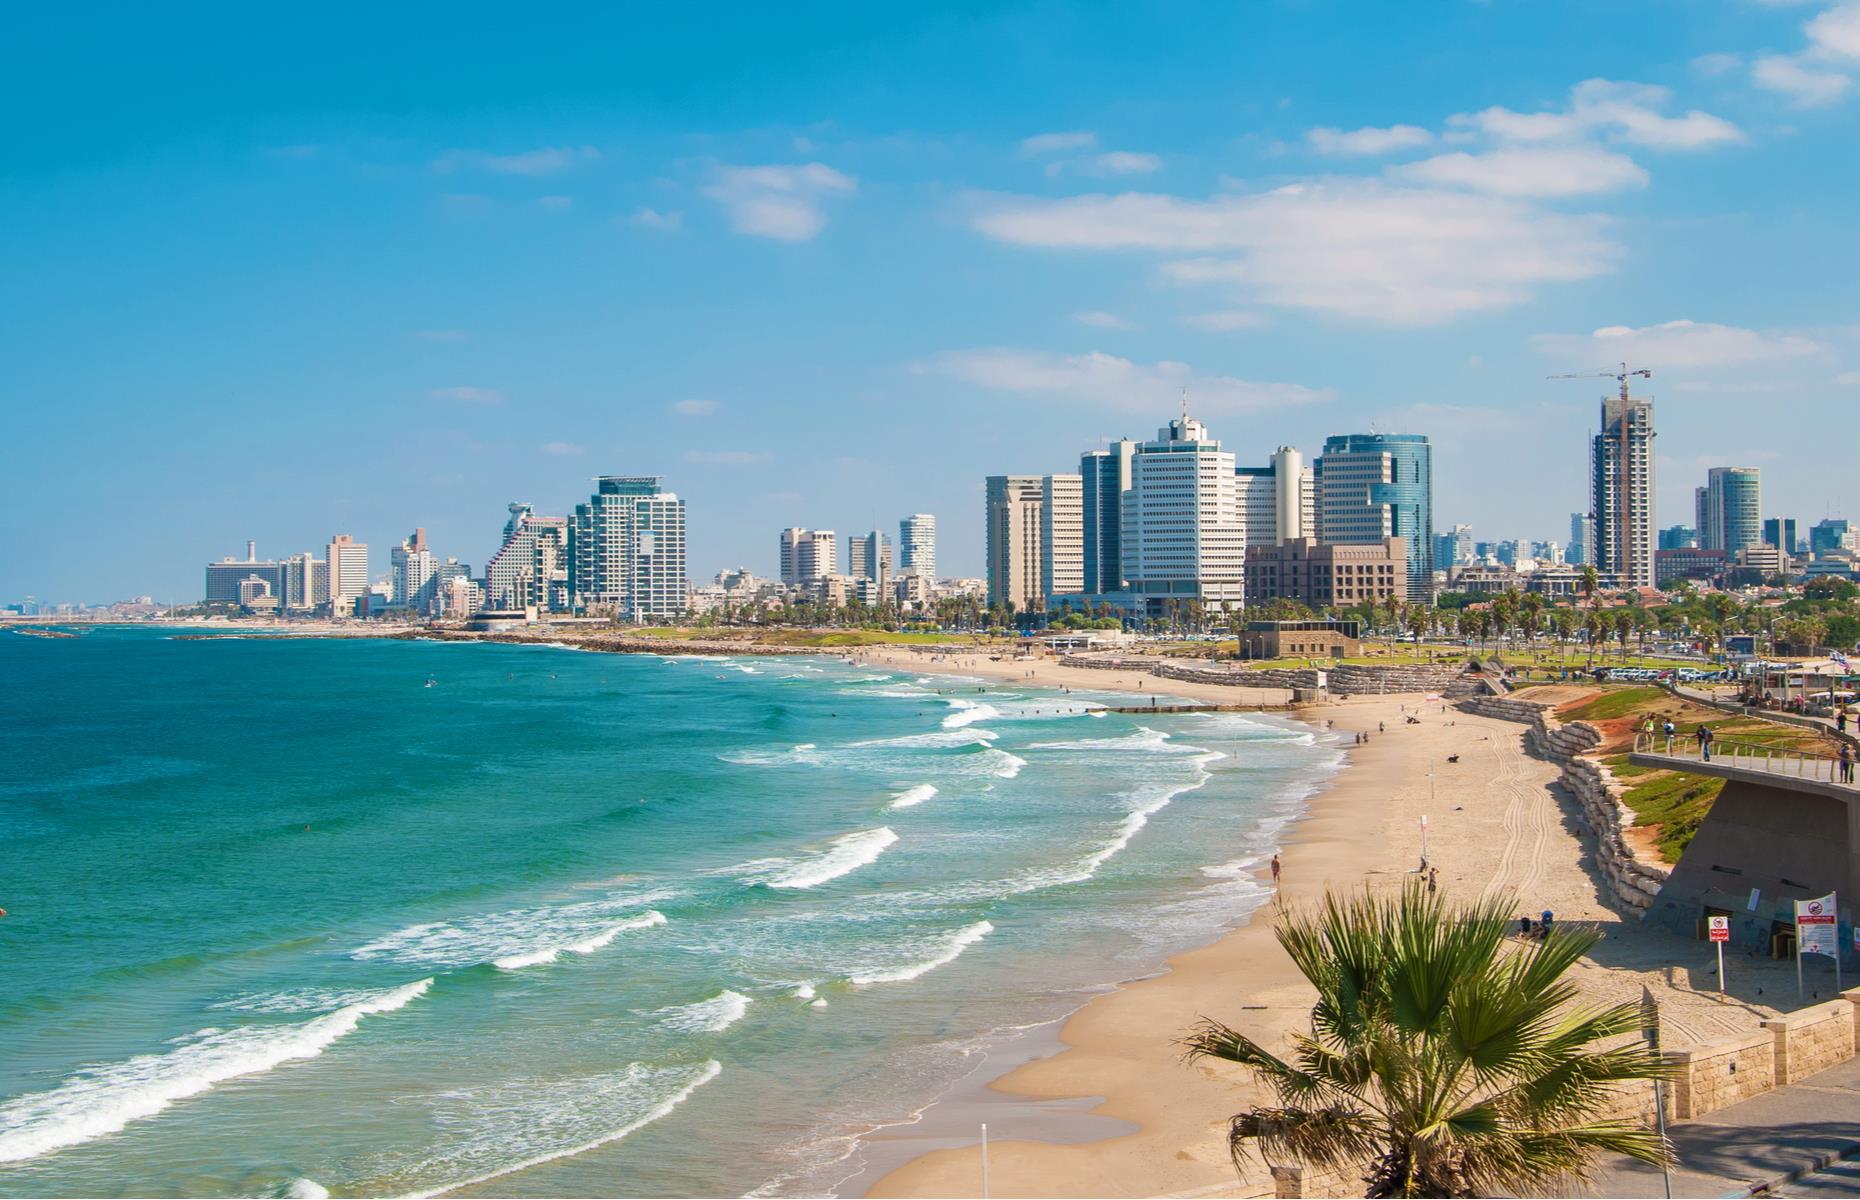 9th most expensive: Tel Aviv, Israel